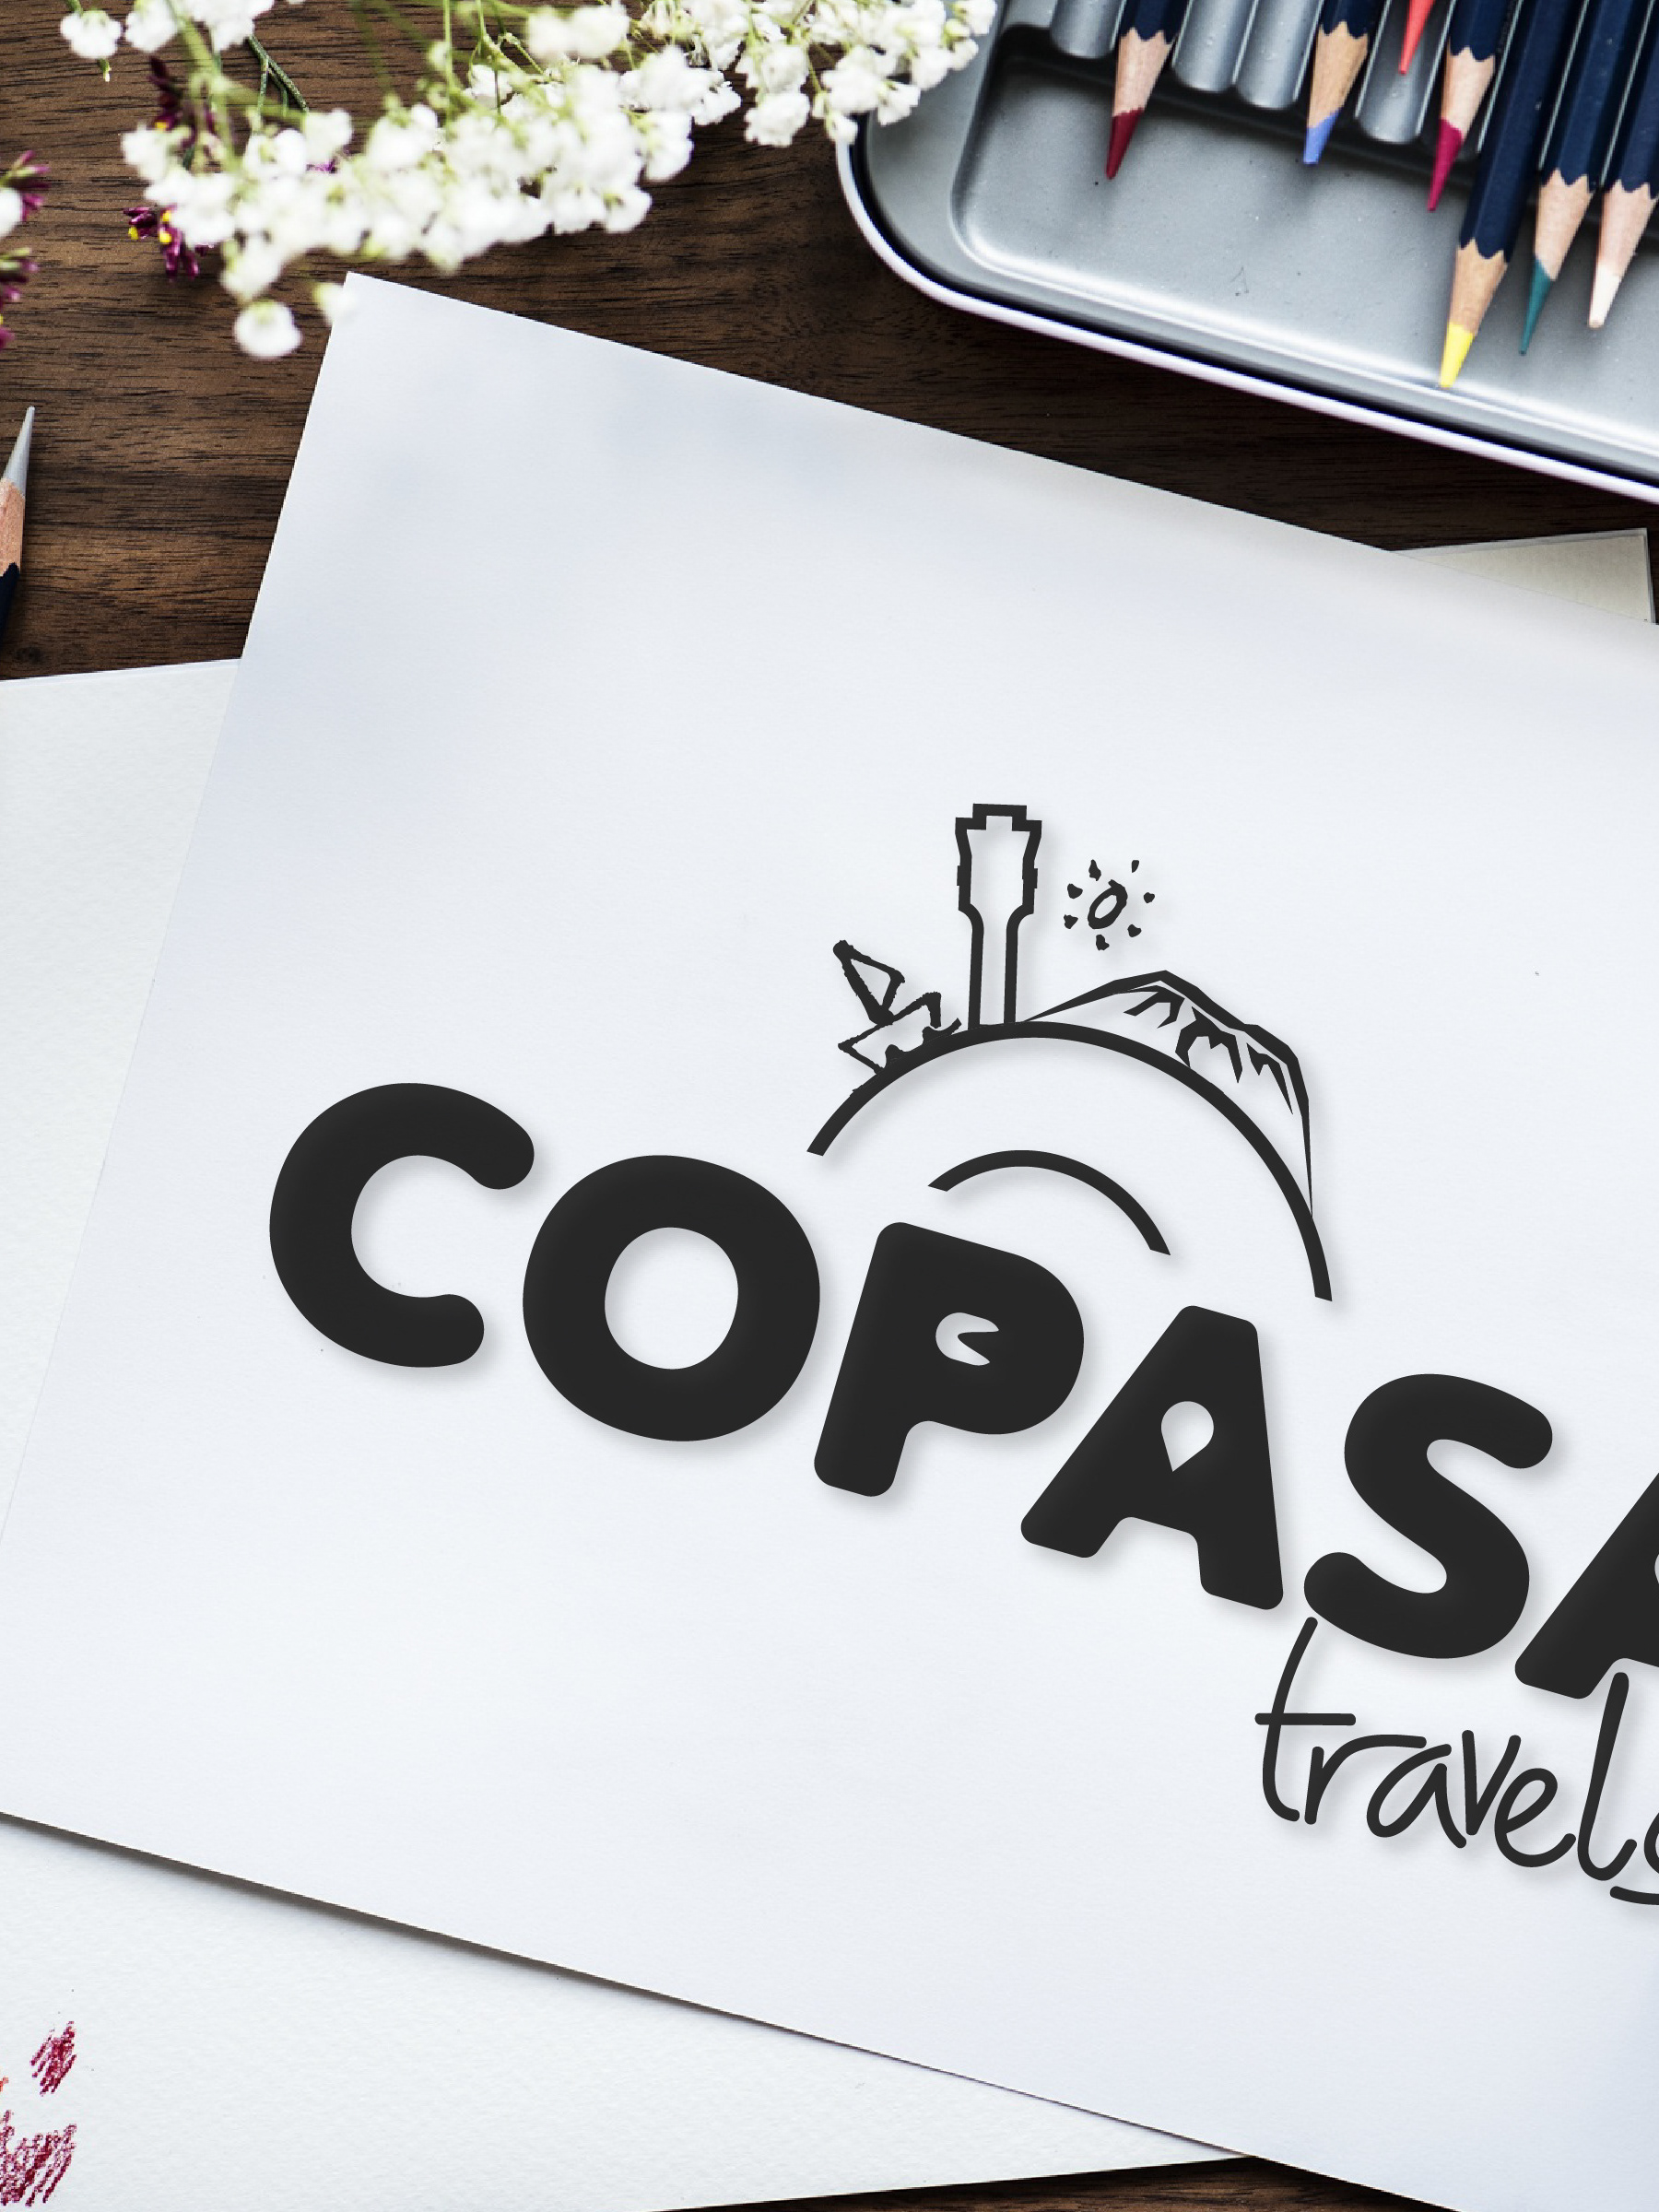 Jumbenylon - COPASA Travels